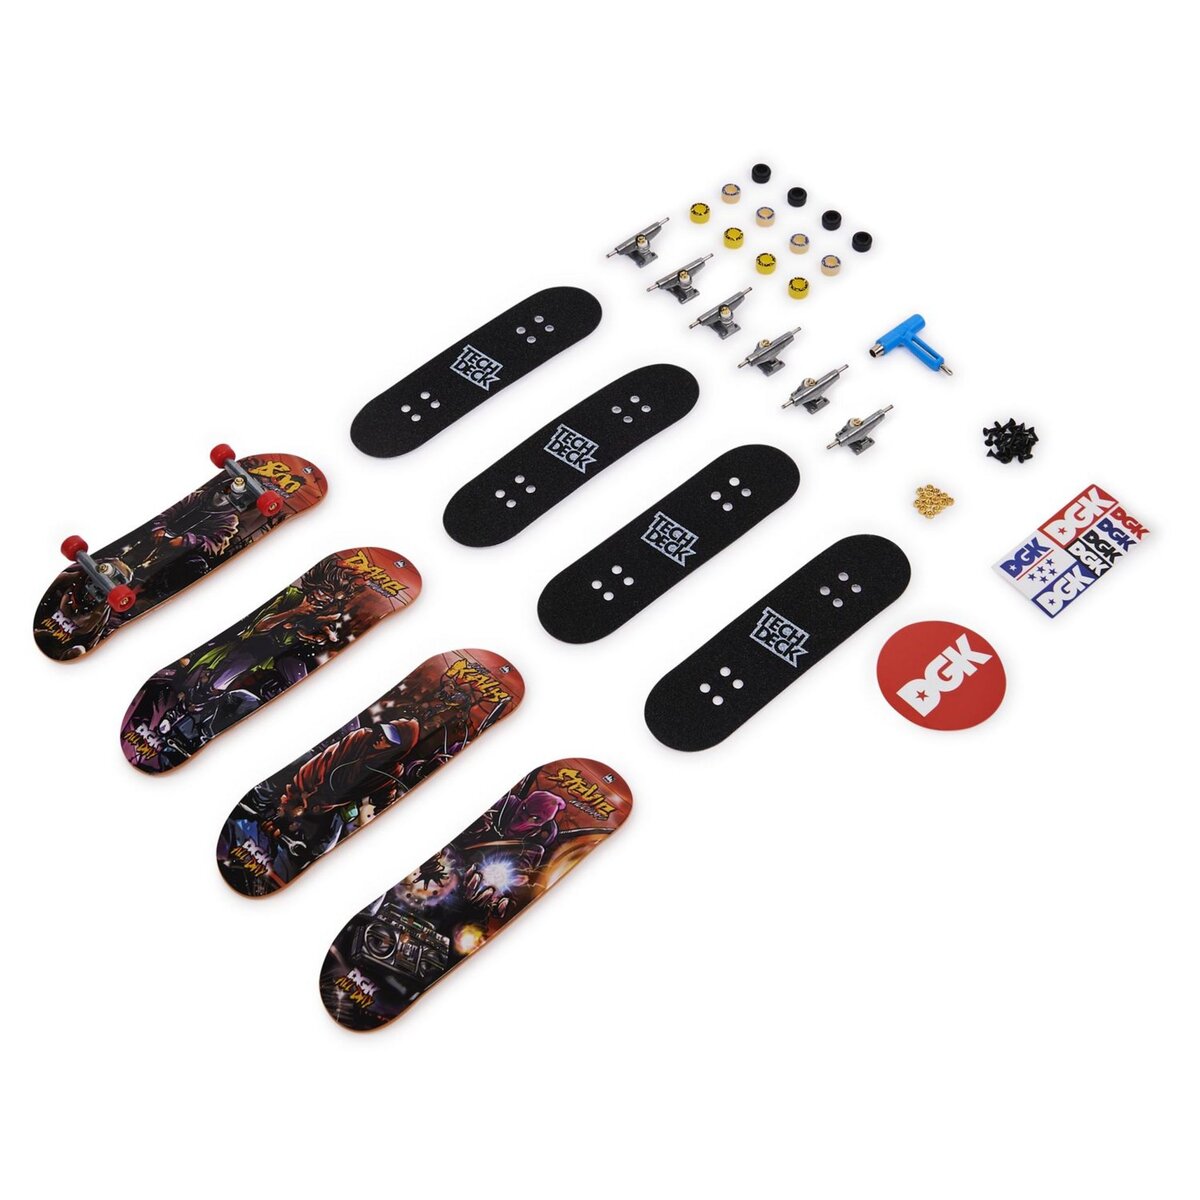 SPIN MASTER Finger Skate - Tech Deck - Paquet de 4 patins à doigts